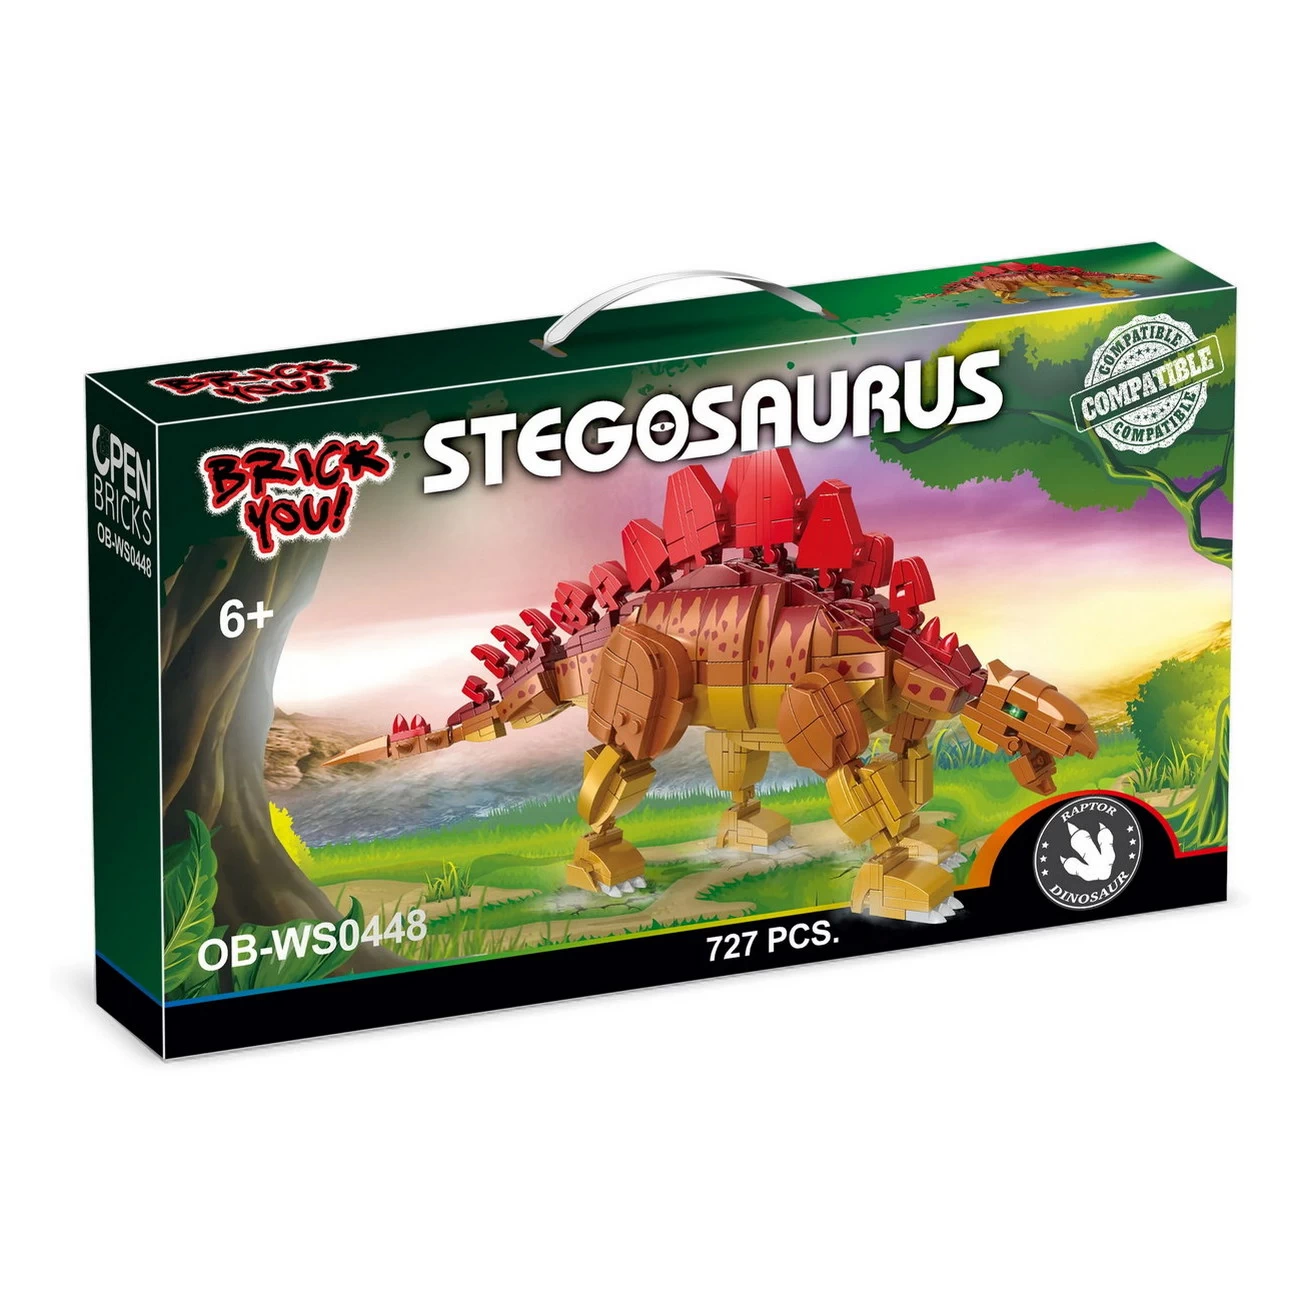 Stegosaurus OPEN BRICKS